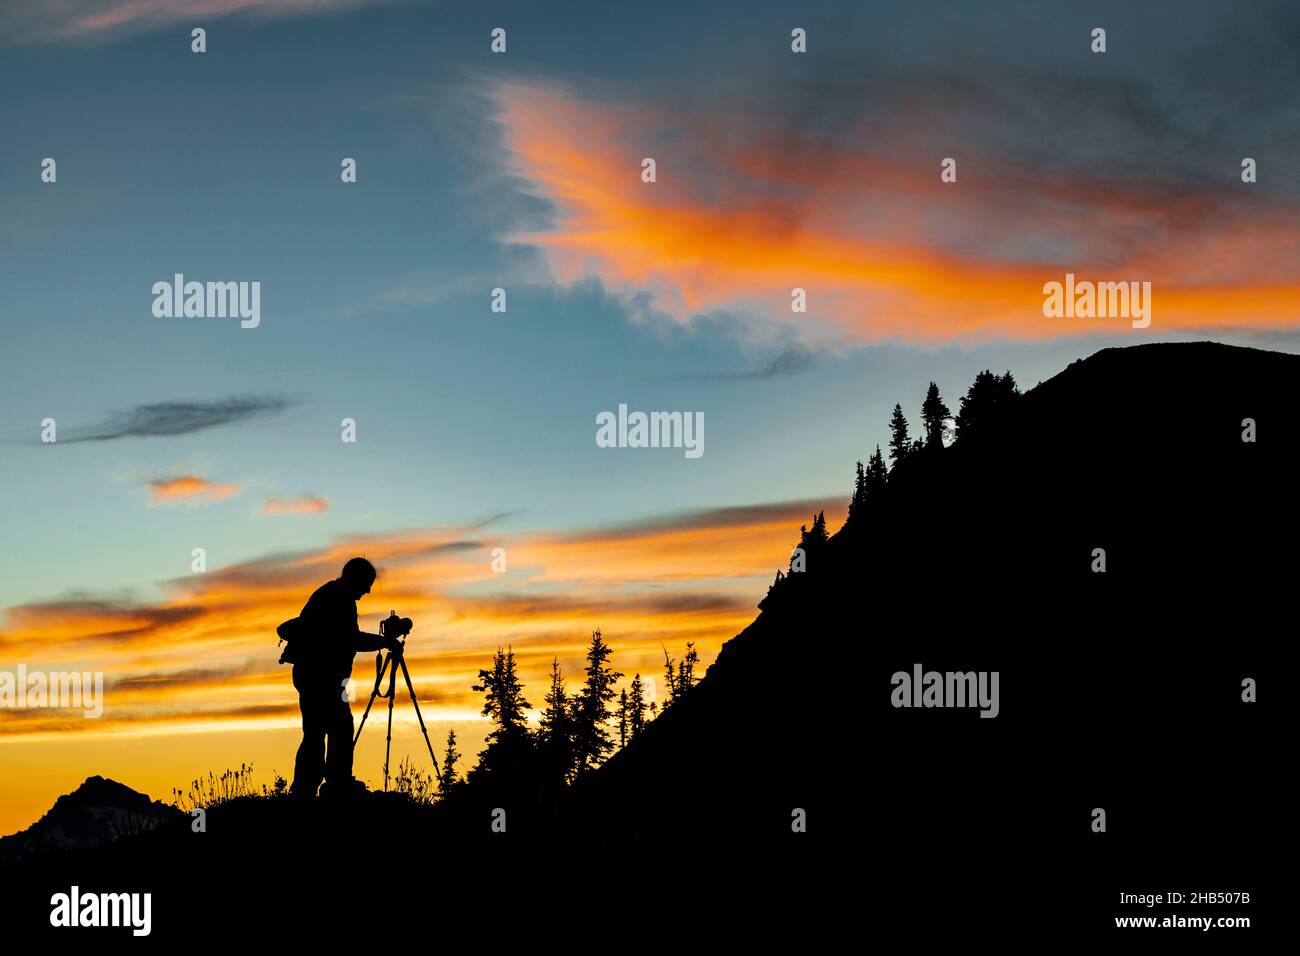 WA20516-00....WASHINGTON - Vicky Spring Mount Baker Snoqualmie Nati fotografiert den Sonnenuntergang entlang des Pacific Crest Trail in der Glacier Peak Wilderness Stockfoto